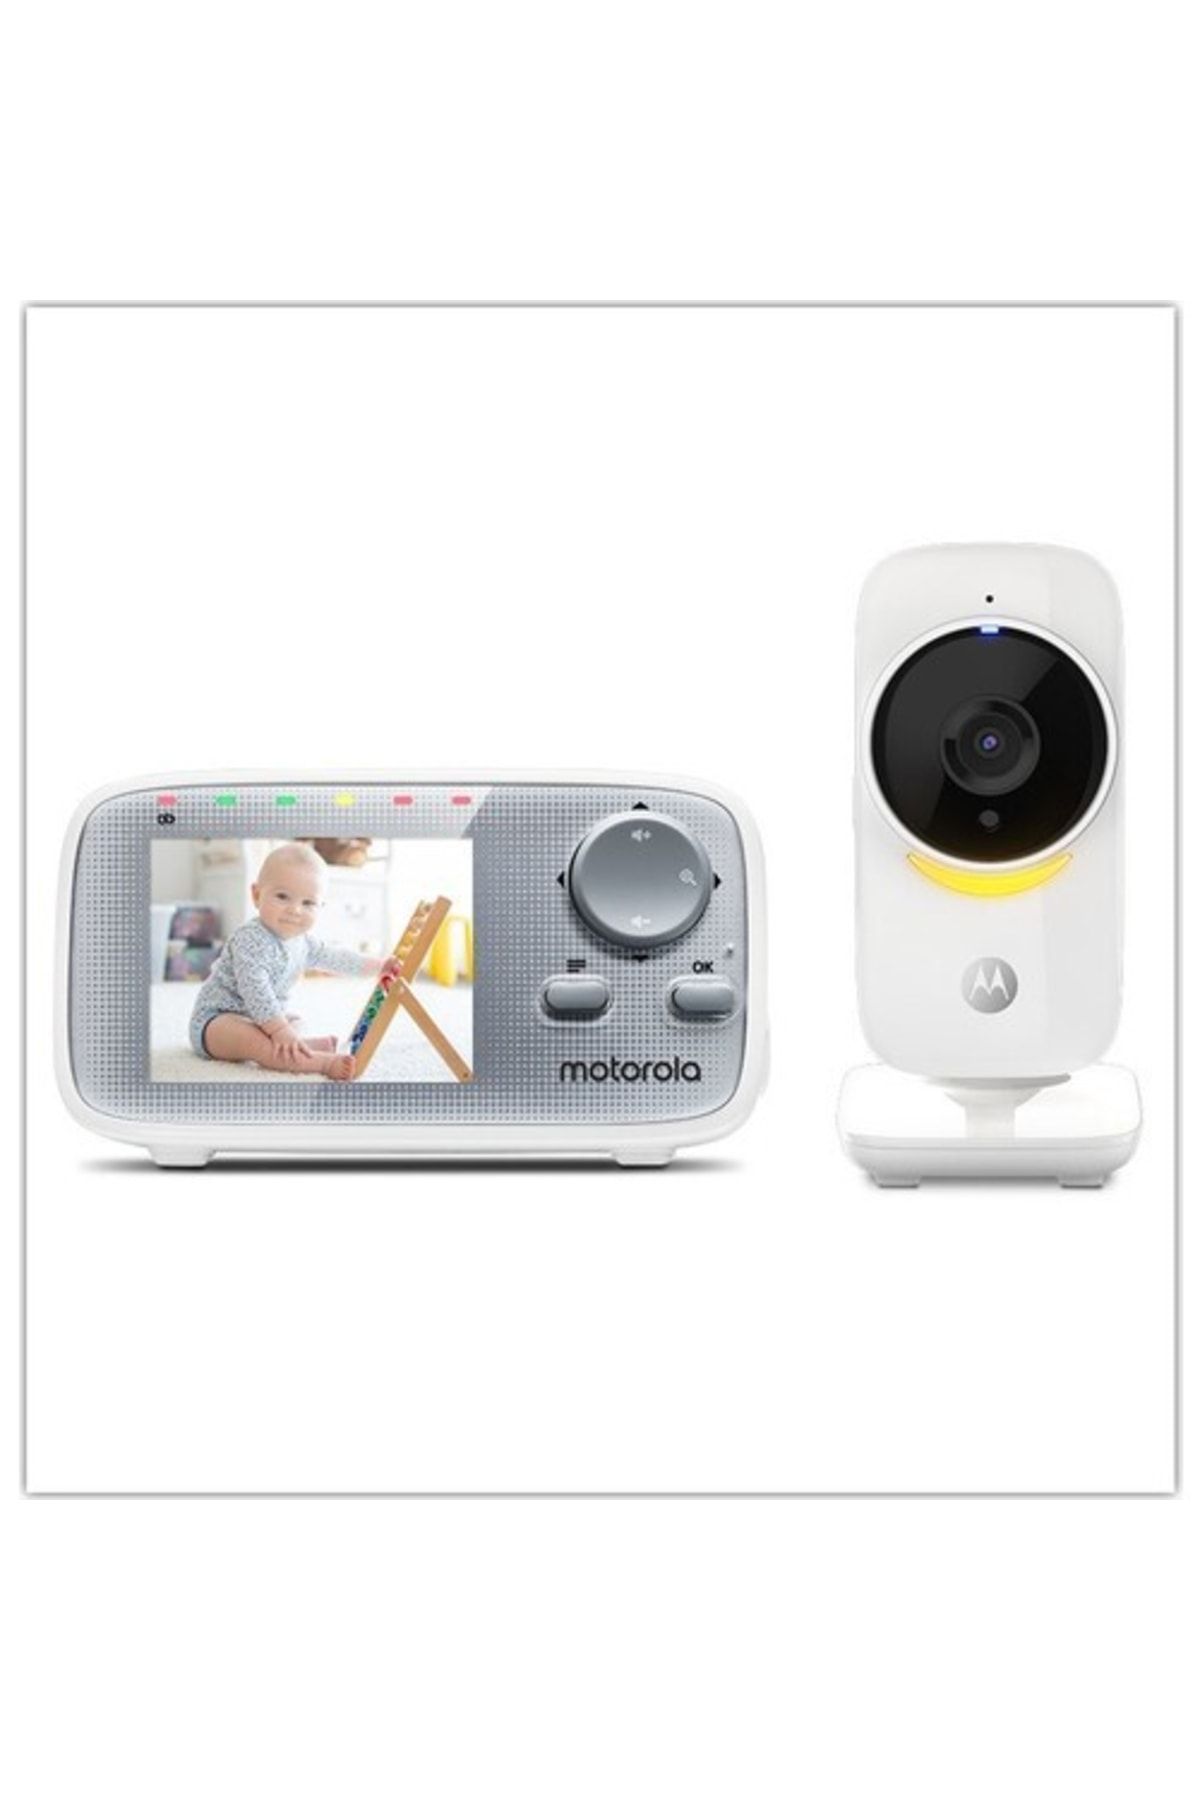 Motorola Mbp482anxl 2.8 " Dijital Bebek Kamerası